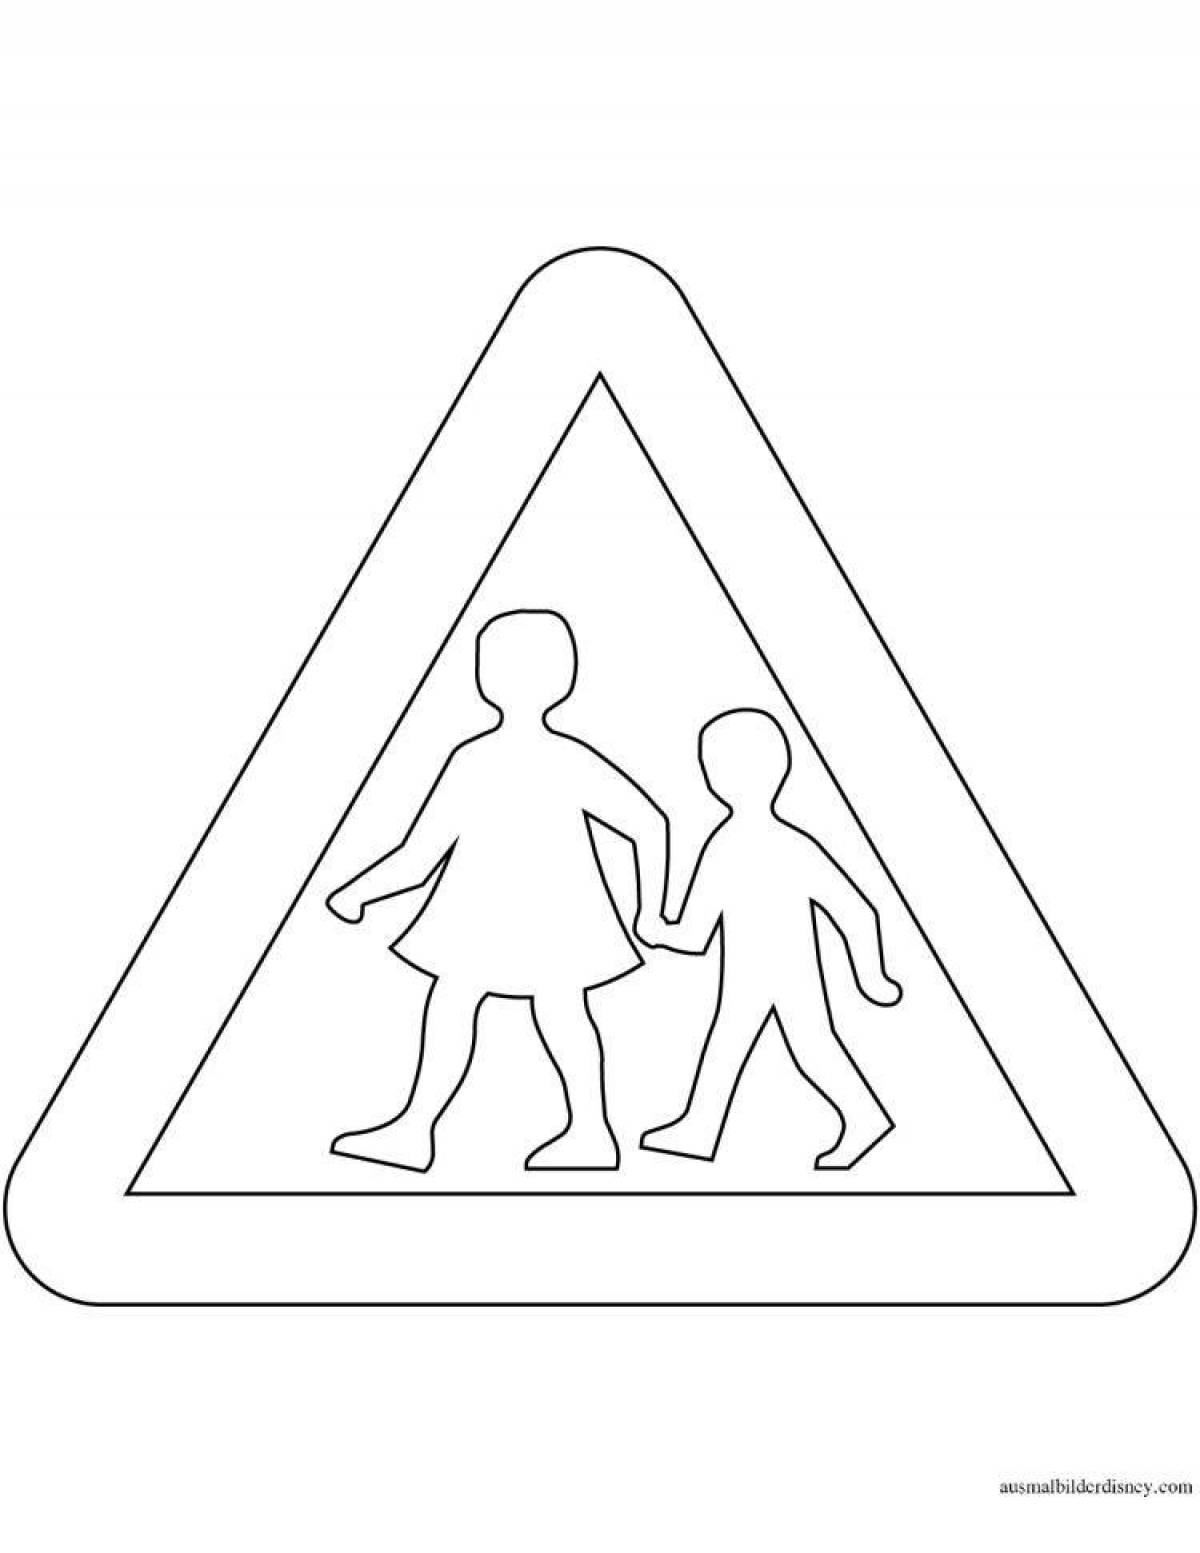 Crossing sign for children #6